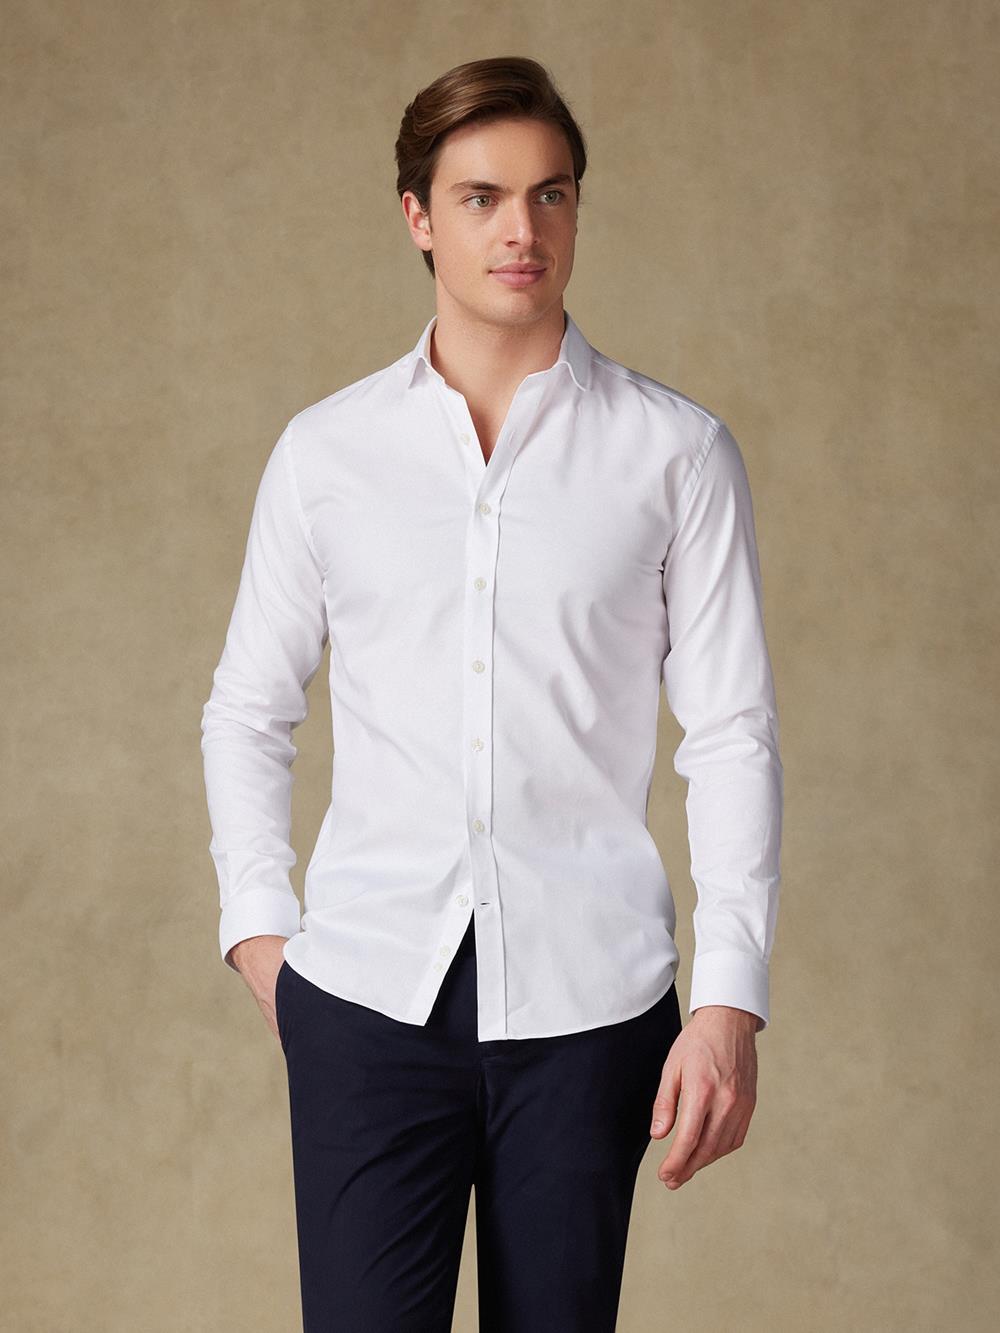 White oxford shirt